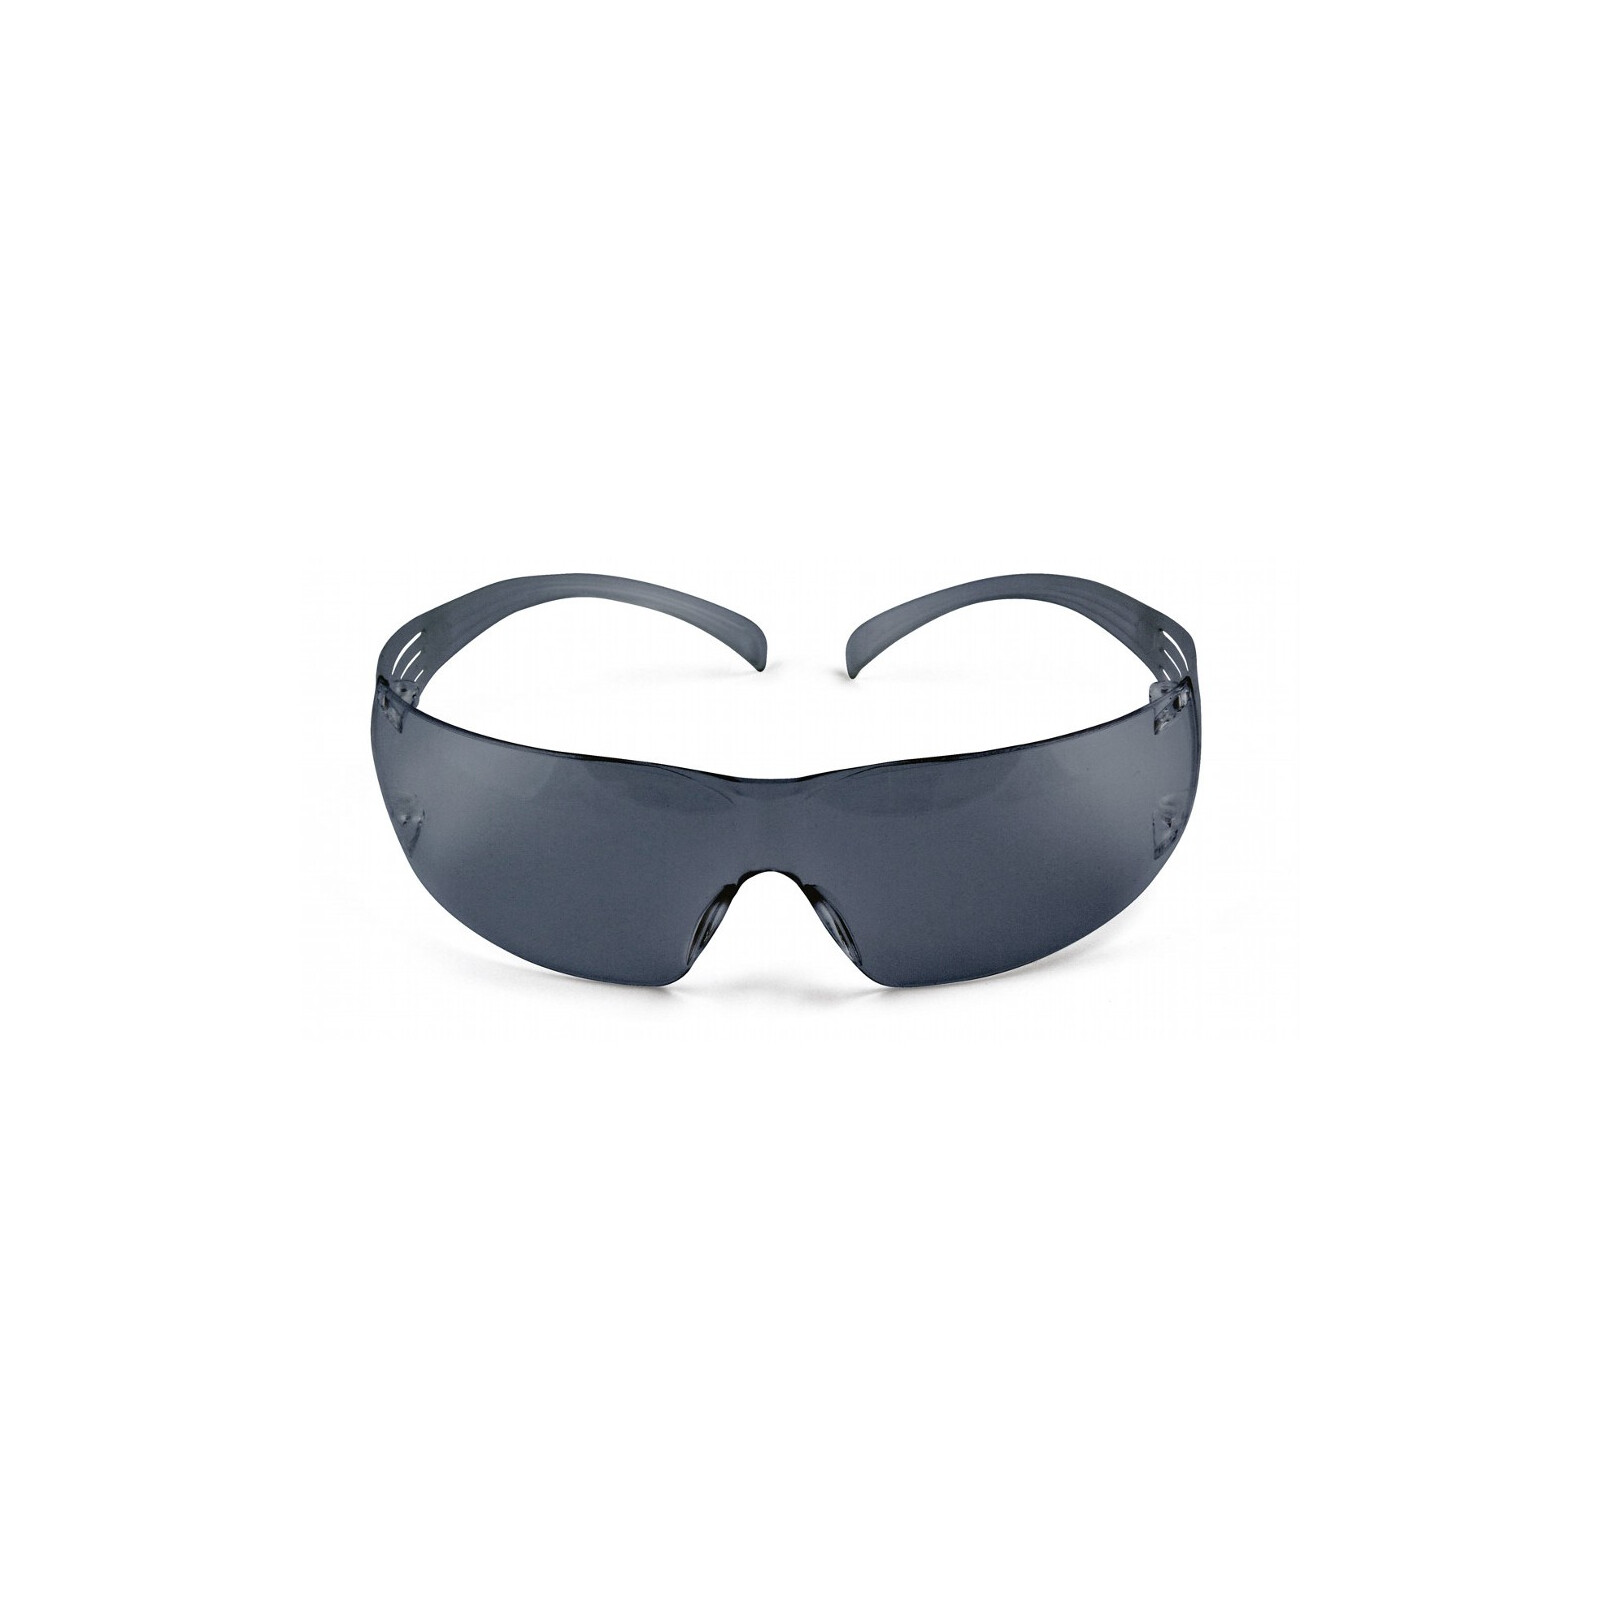 3M Peltor Schiessbrille SecureFit 200 Farbe: Grau